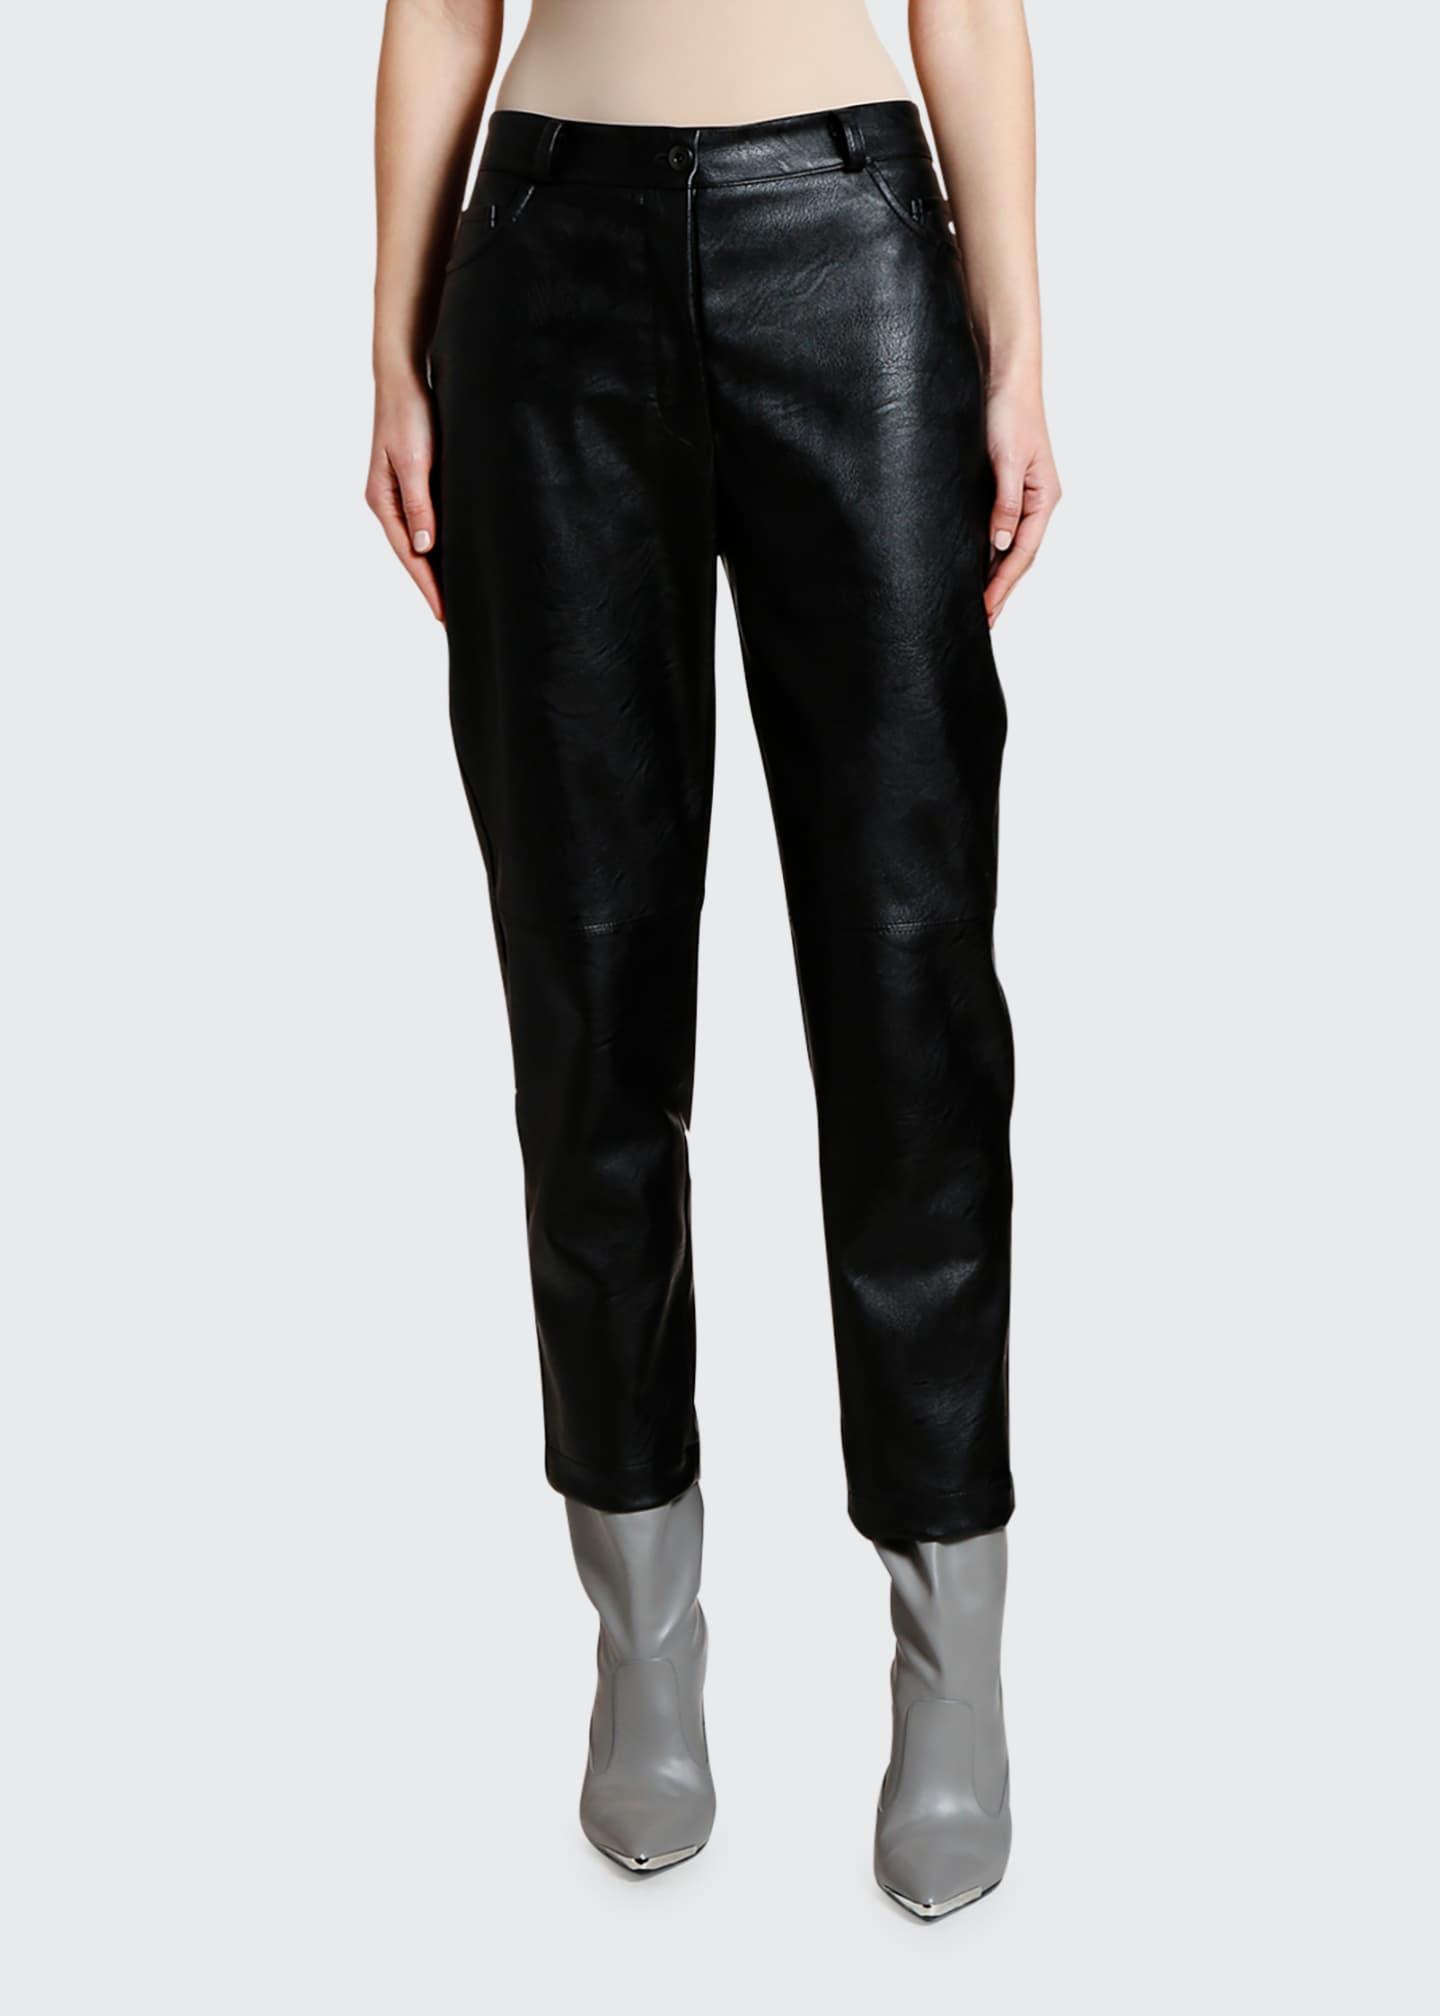 stella mccartney faux leather pants